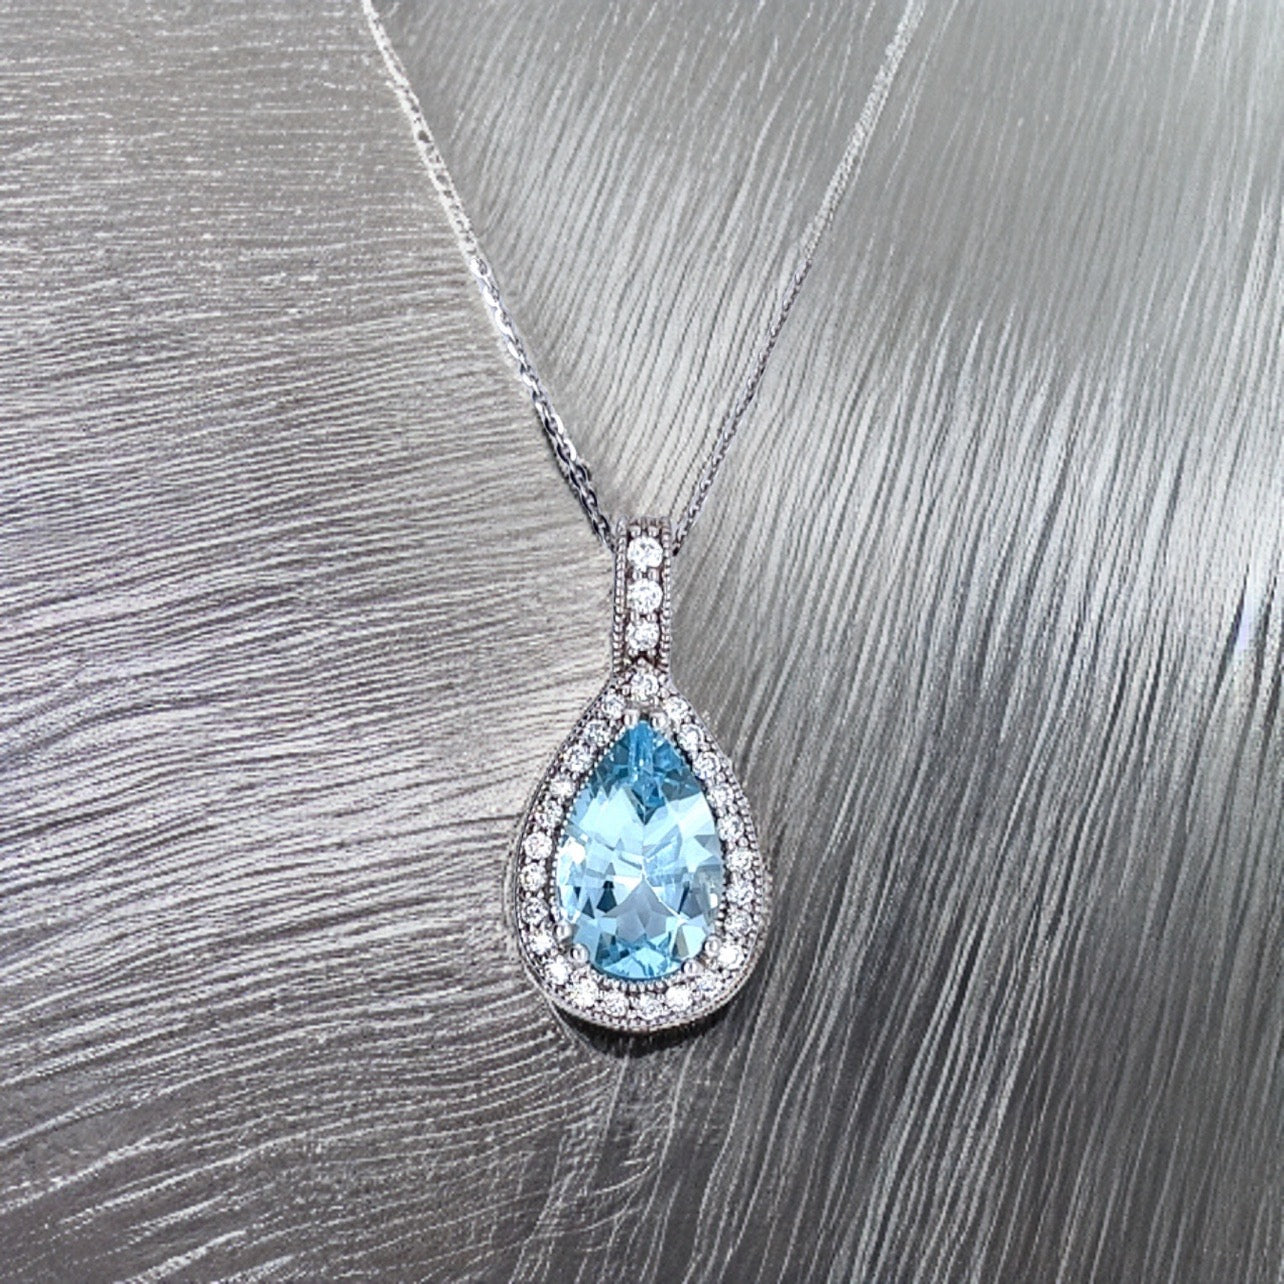 Natural Aquamarine Diamond Pendant With Chain 18" 14k W Gold 4.19 TCW Certified $5,950 213254 - Certified Fine Jewelry